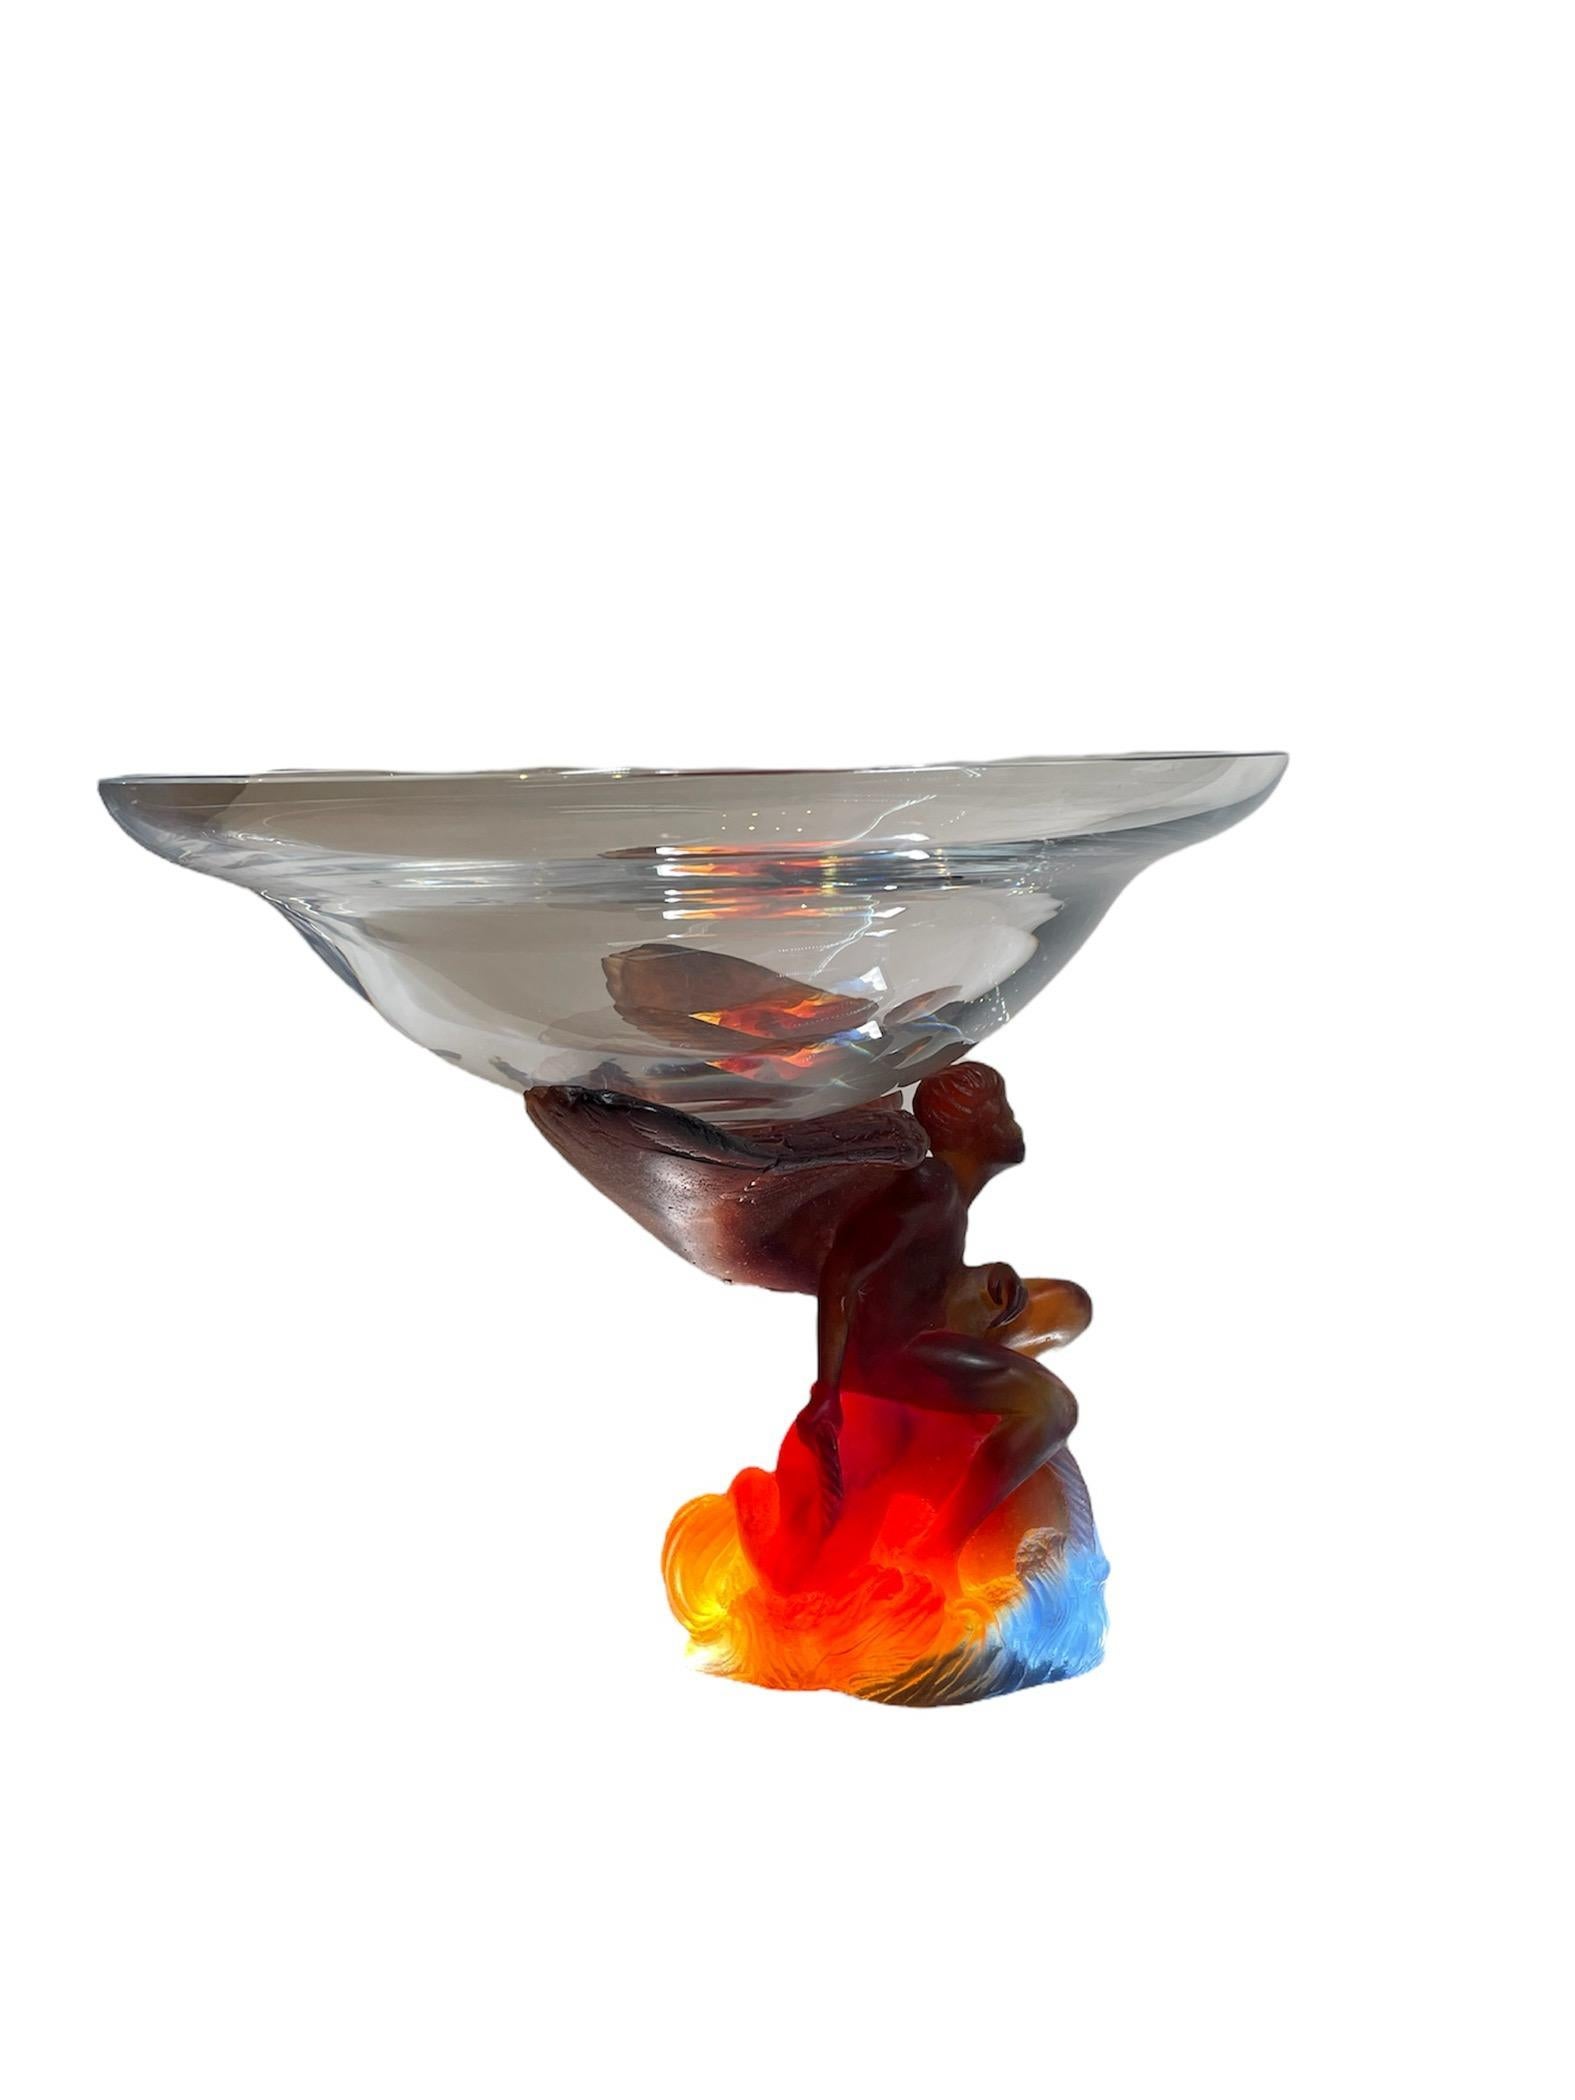 Molded Daum Pate de Verre Crystal Angel Sculpture Compote/Bowl For Sale